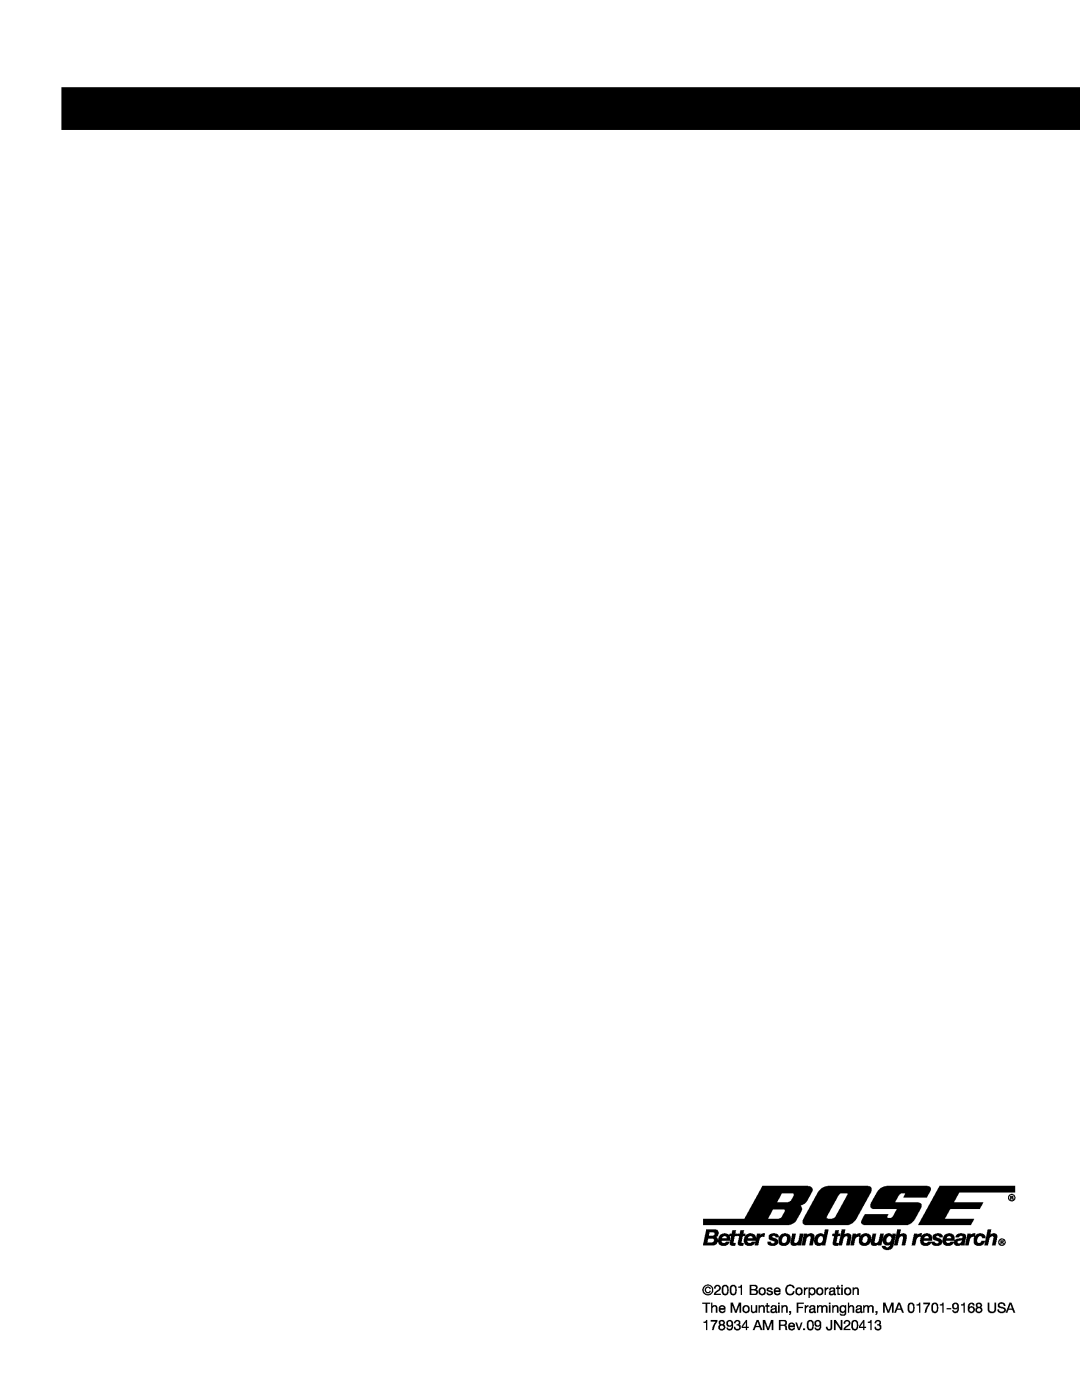 Bose manual Bose Corporation, The Mountain, Framingham, MA 01701-9168USA, AM Rev.09 JN20413 